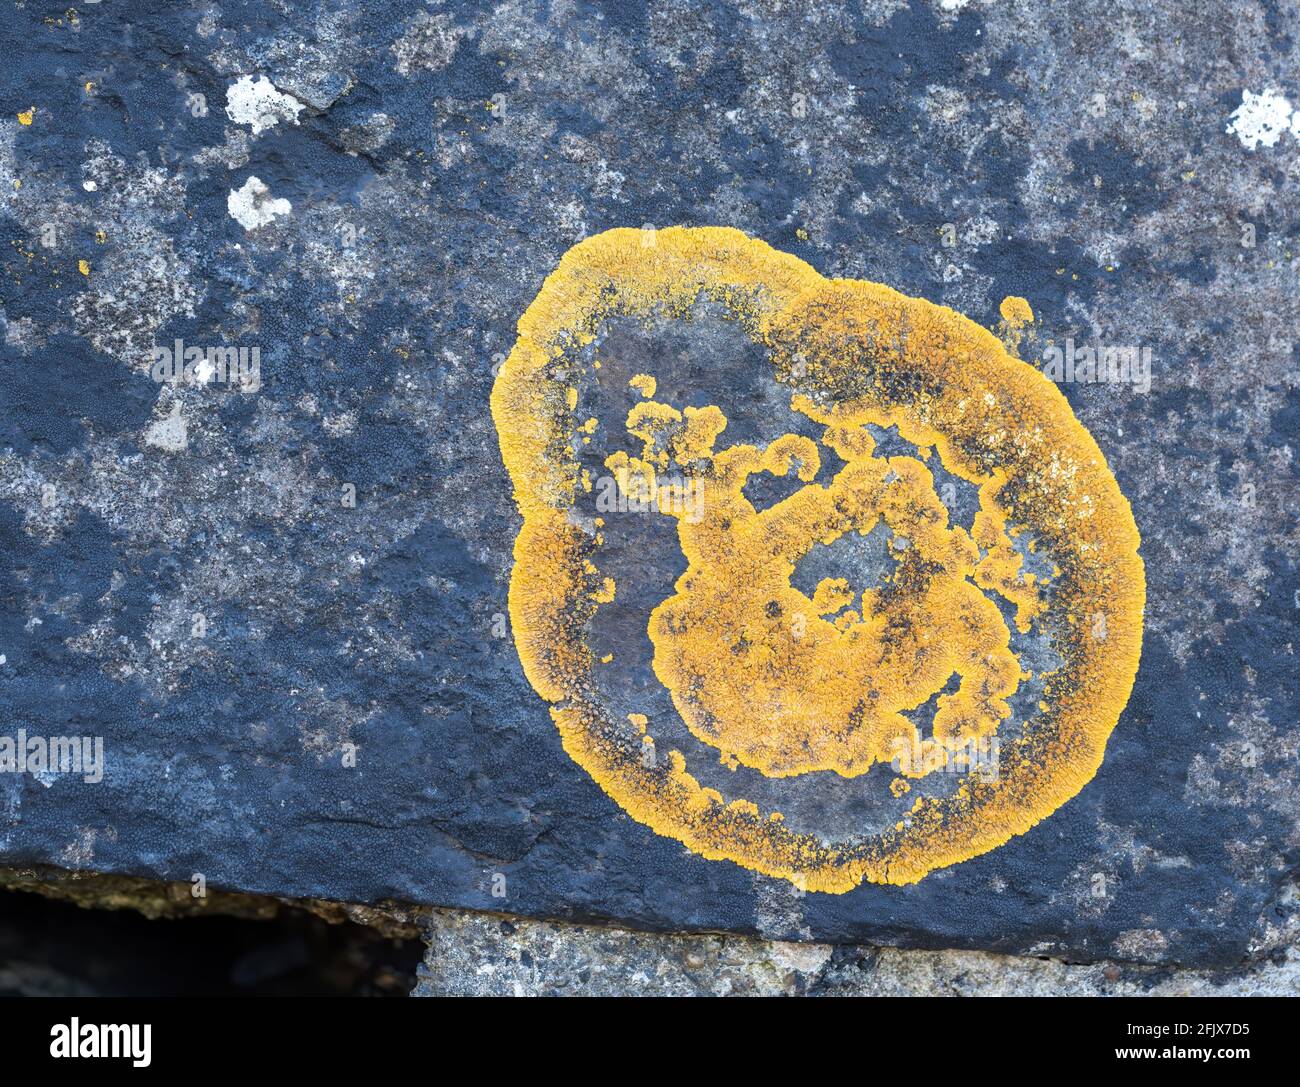 Caloplaca (Polycauliona) verruculifera yellow lichen growing on rock, North Devon, UK. Stock Photo